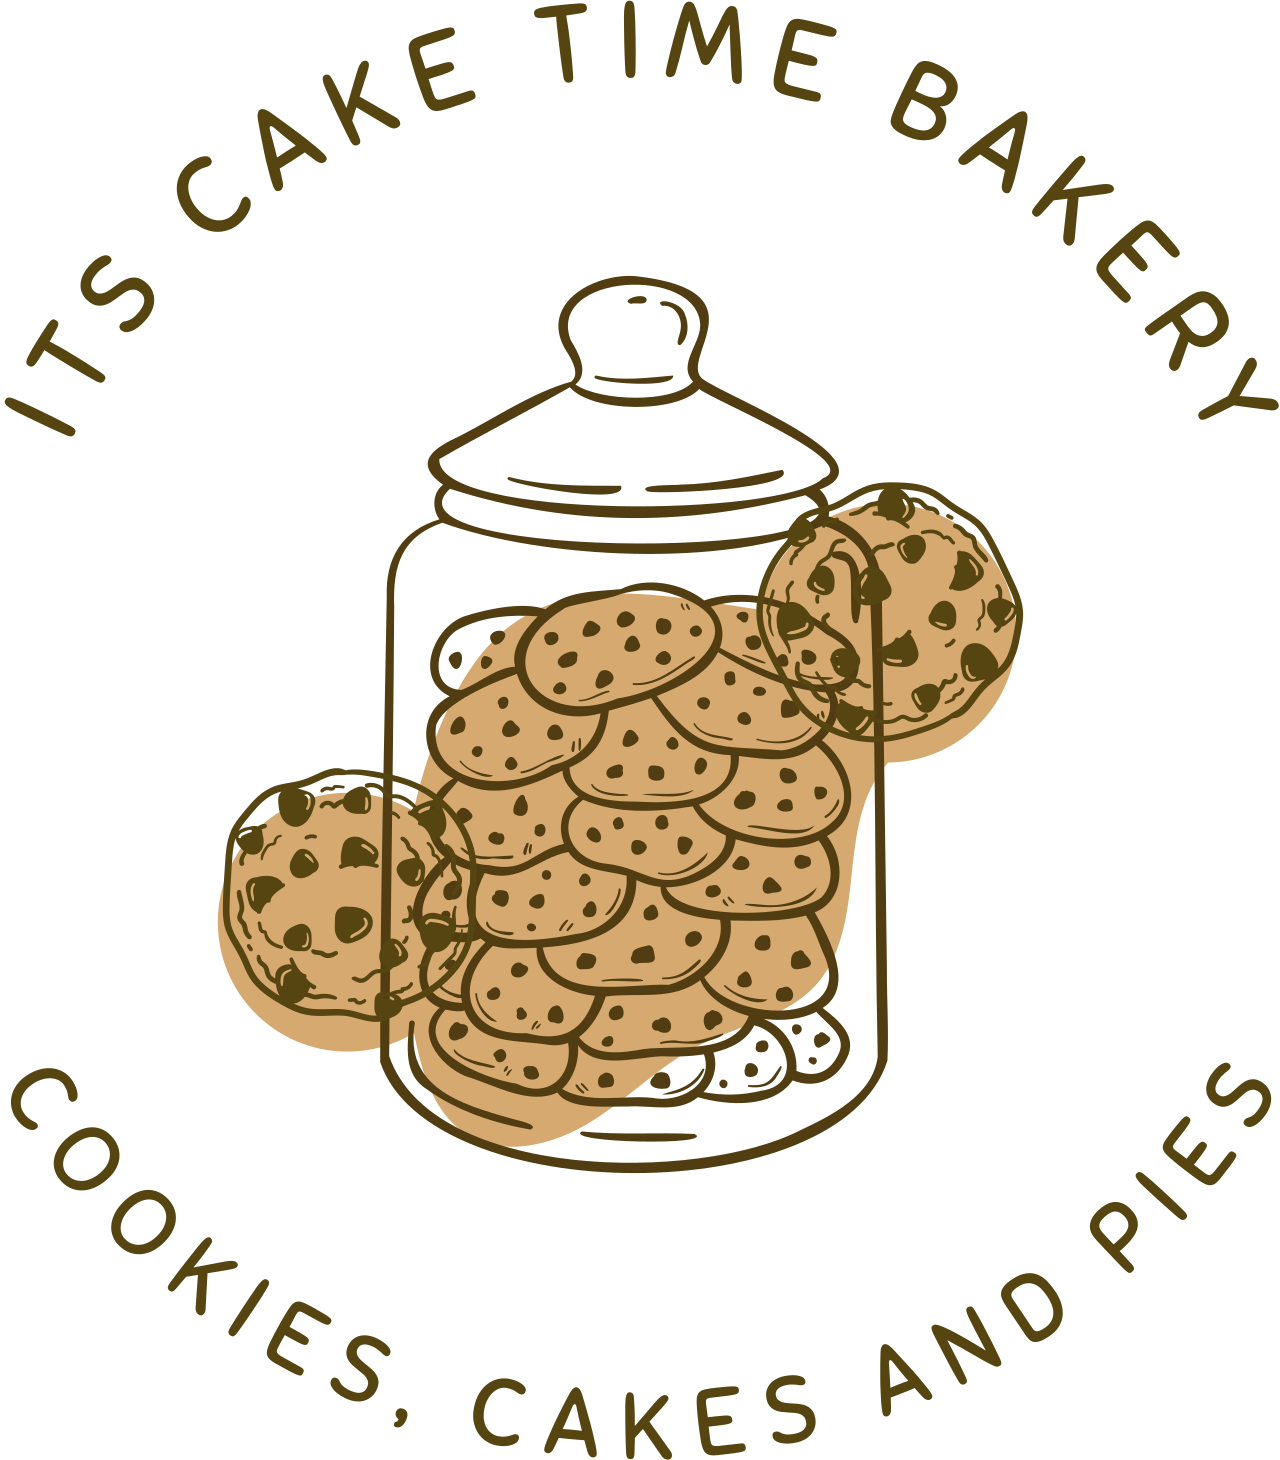 ITS CAKE TIME BAKERY's logo